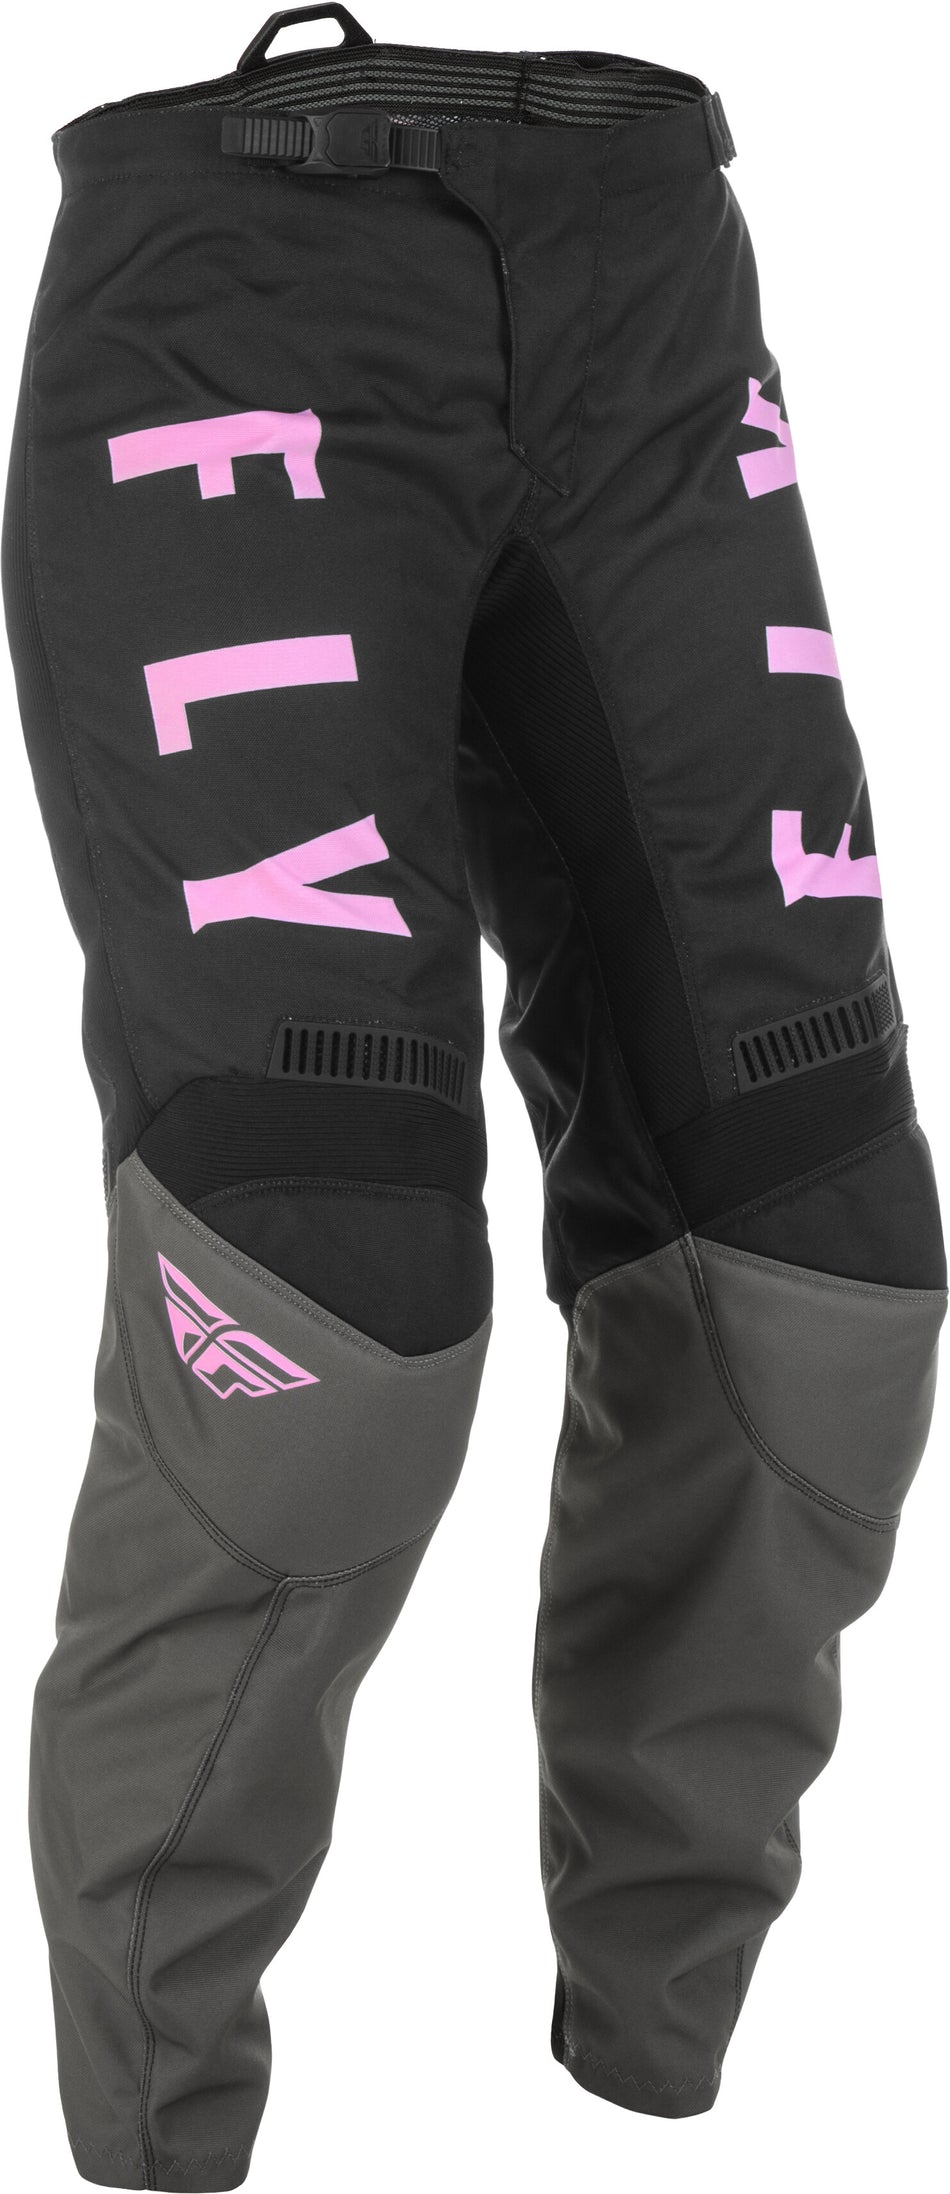 FLY RACING Women's F-16 Pants Grey/Black/Pink Sz 0/02 375-83104